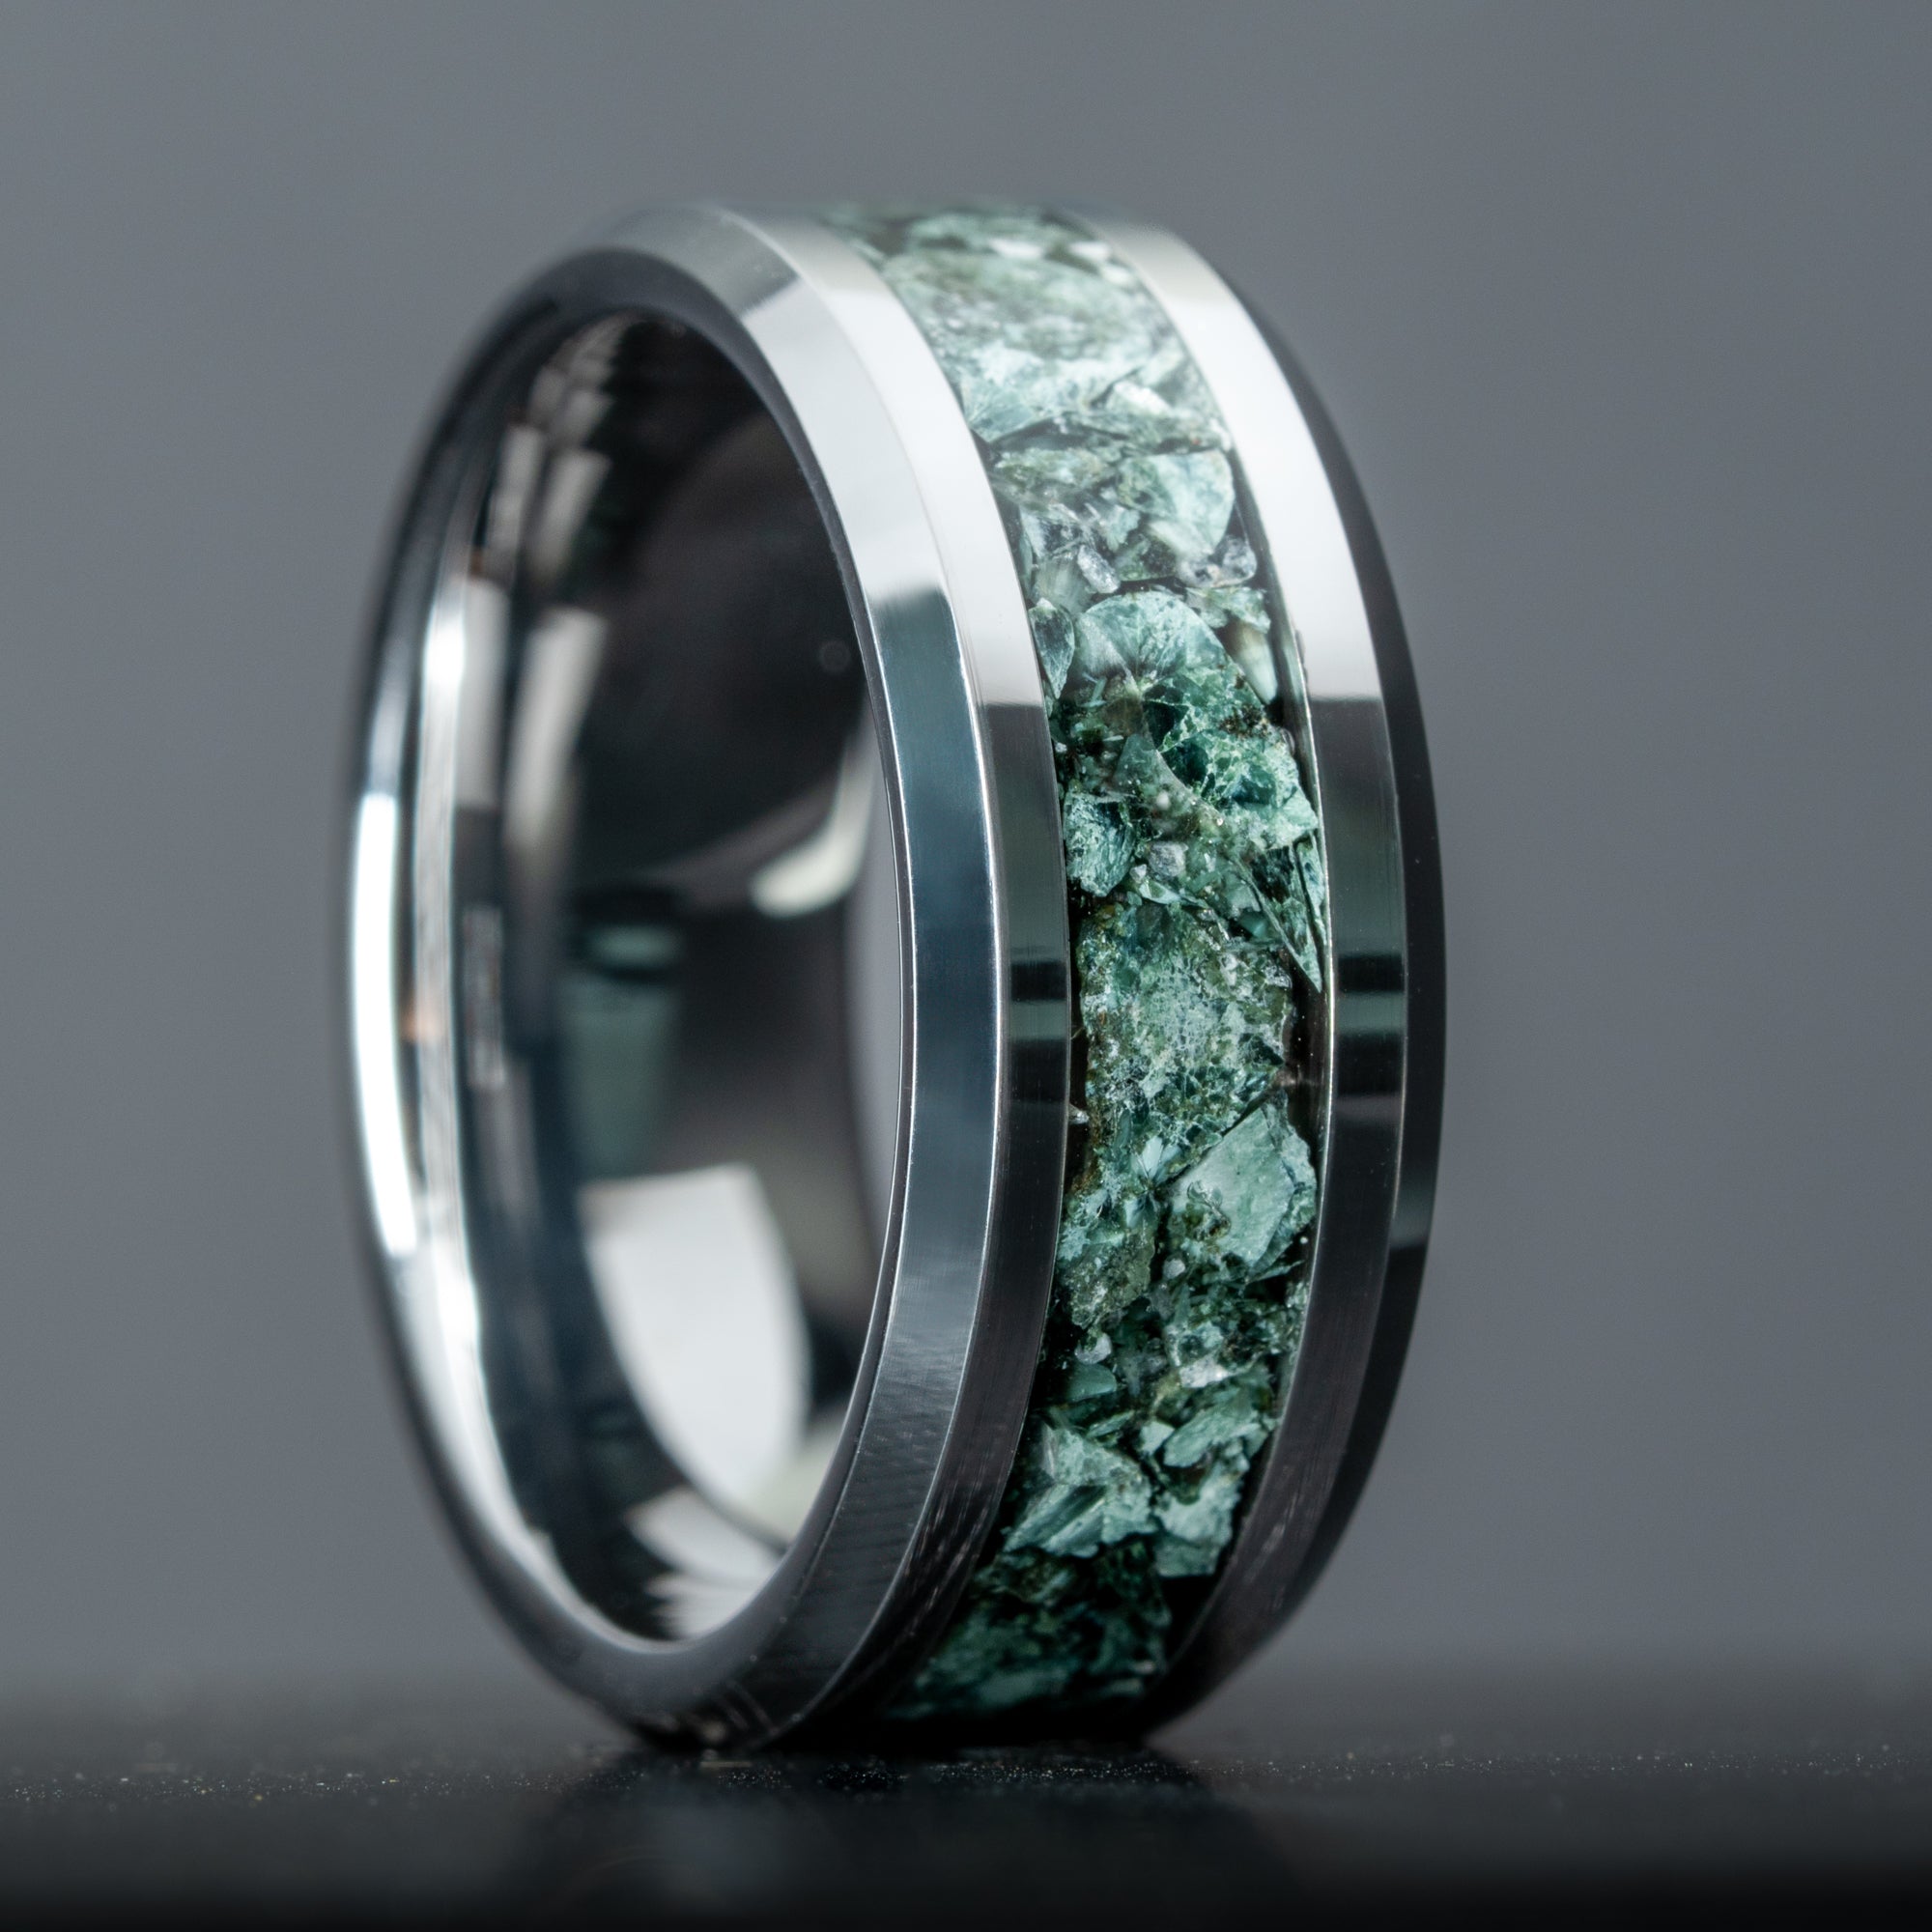 Beveled Tungsten Isle Royale Greenstone Inlay Ring